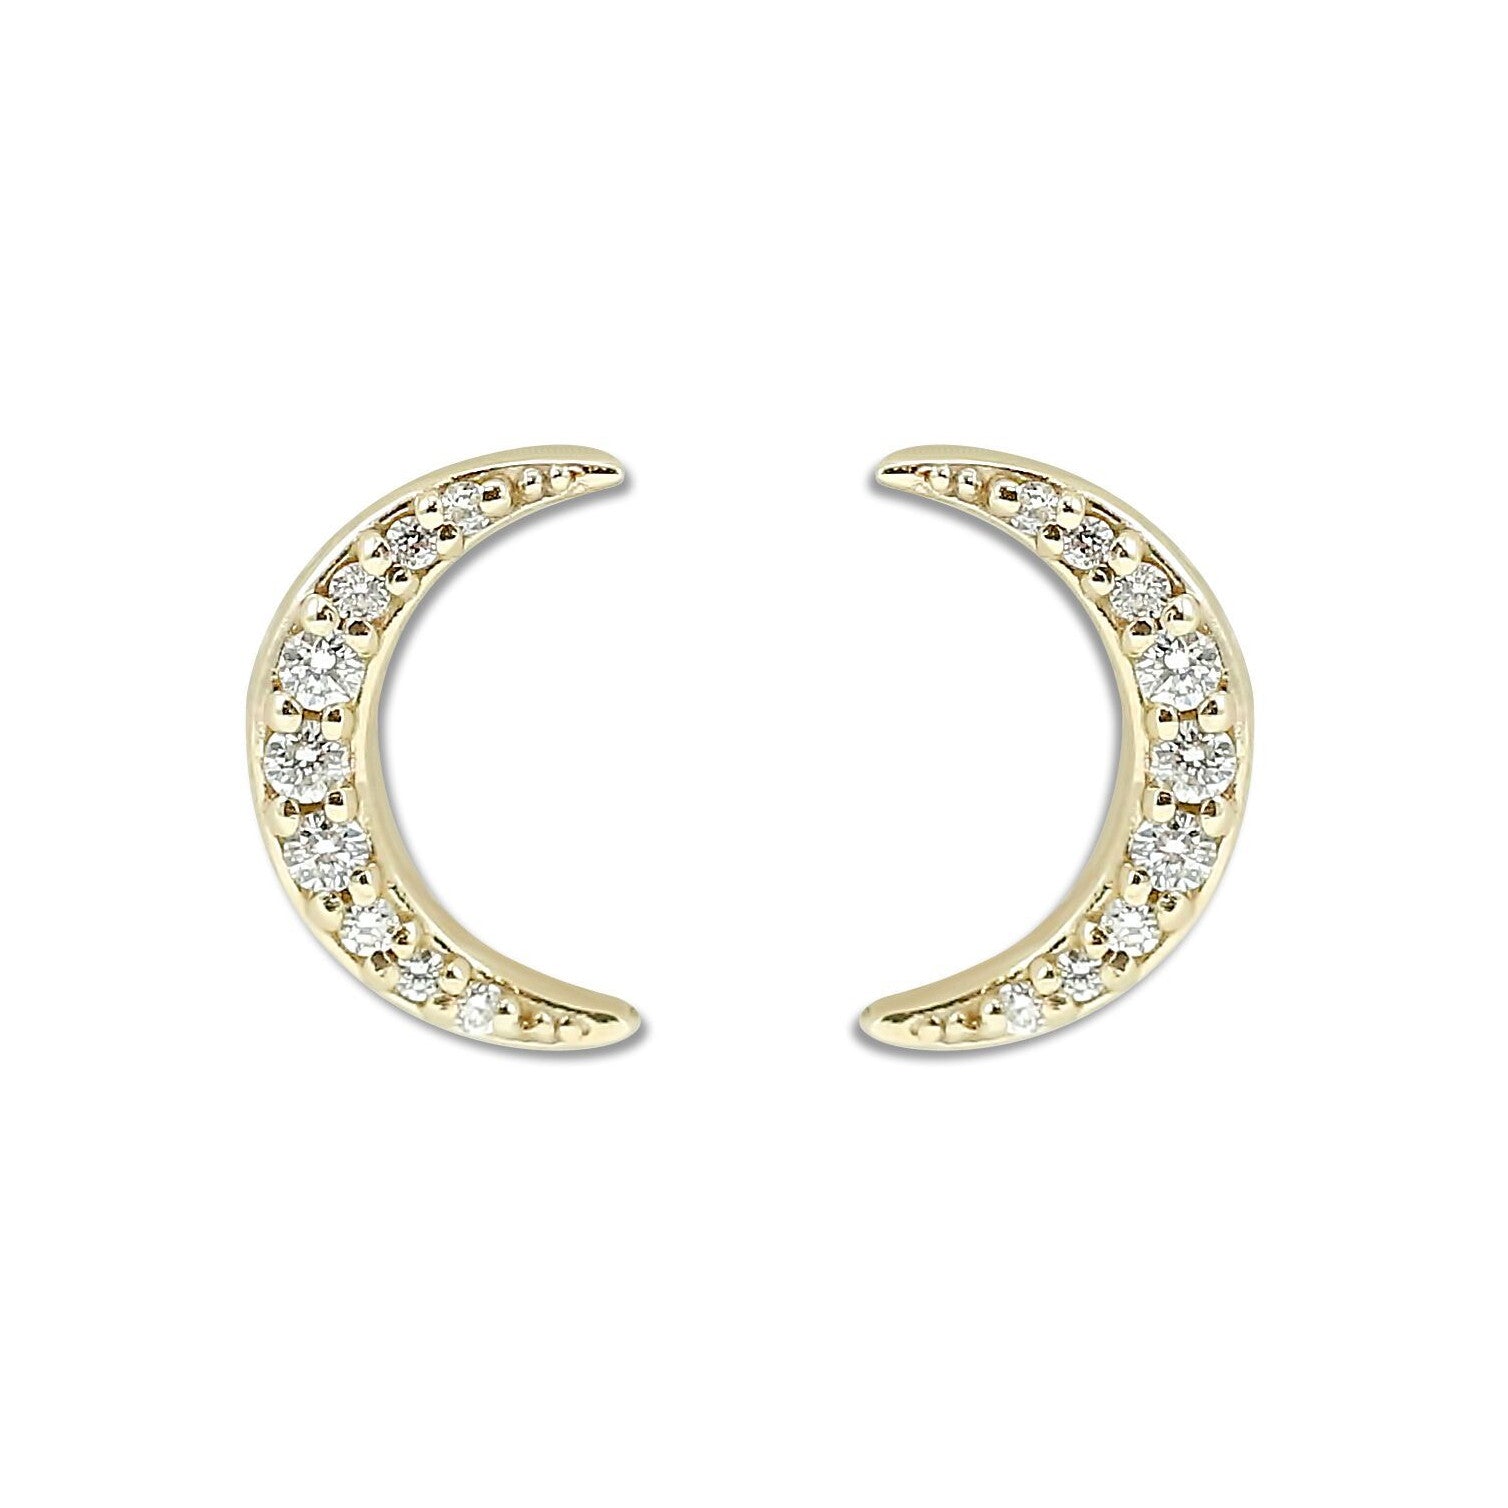 14k yellow gold half moon crescent diamond stud earrings ~0.10tcw diamonds